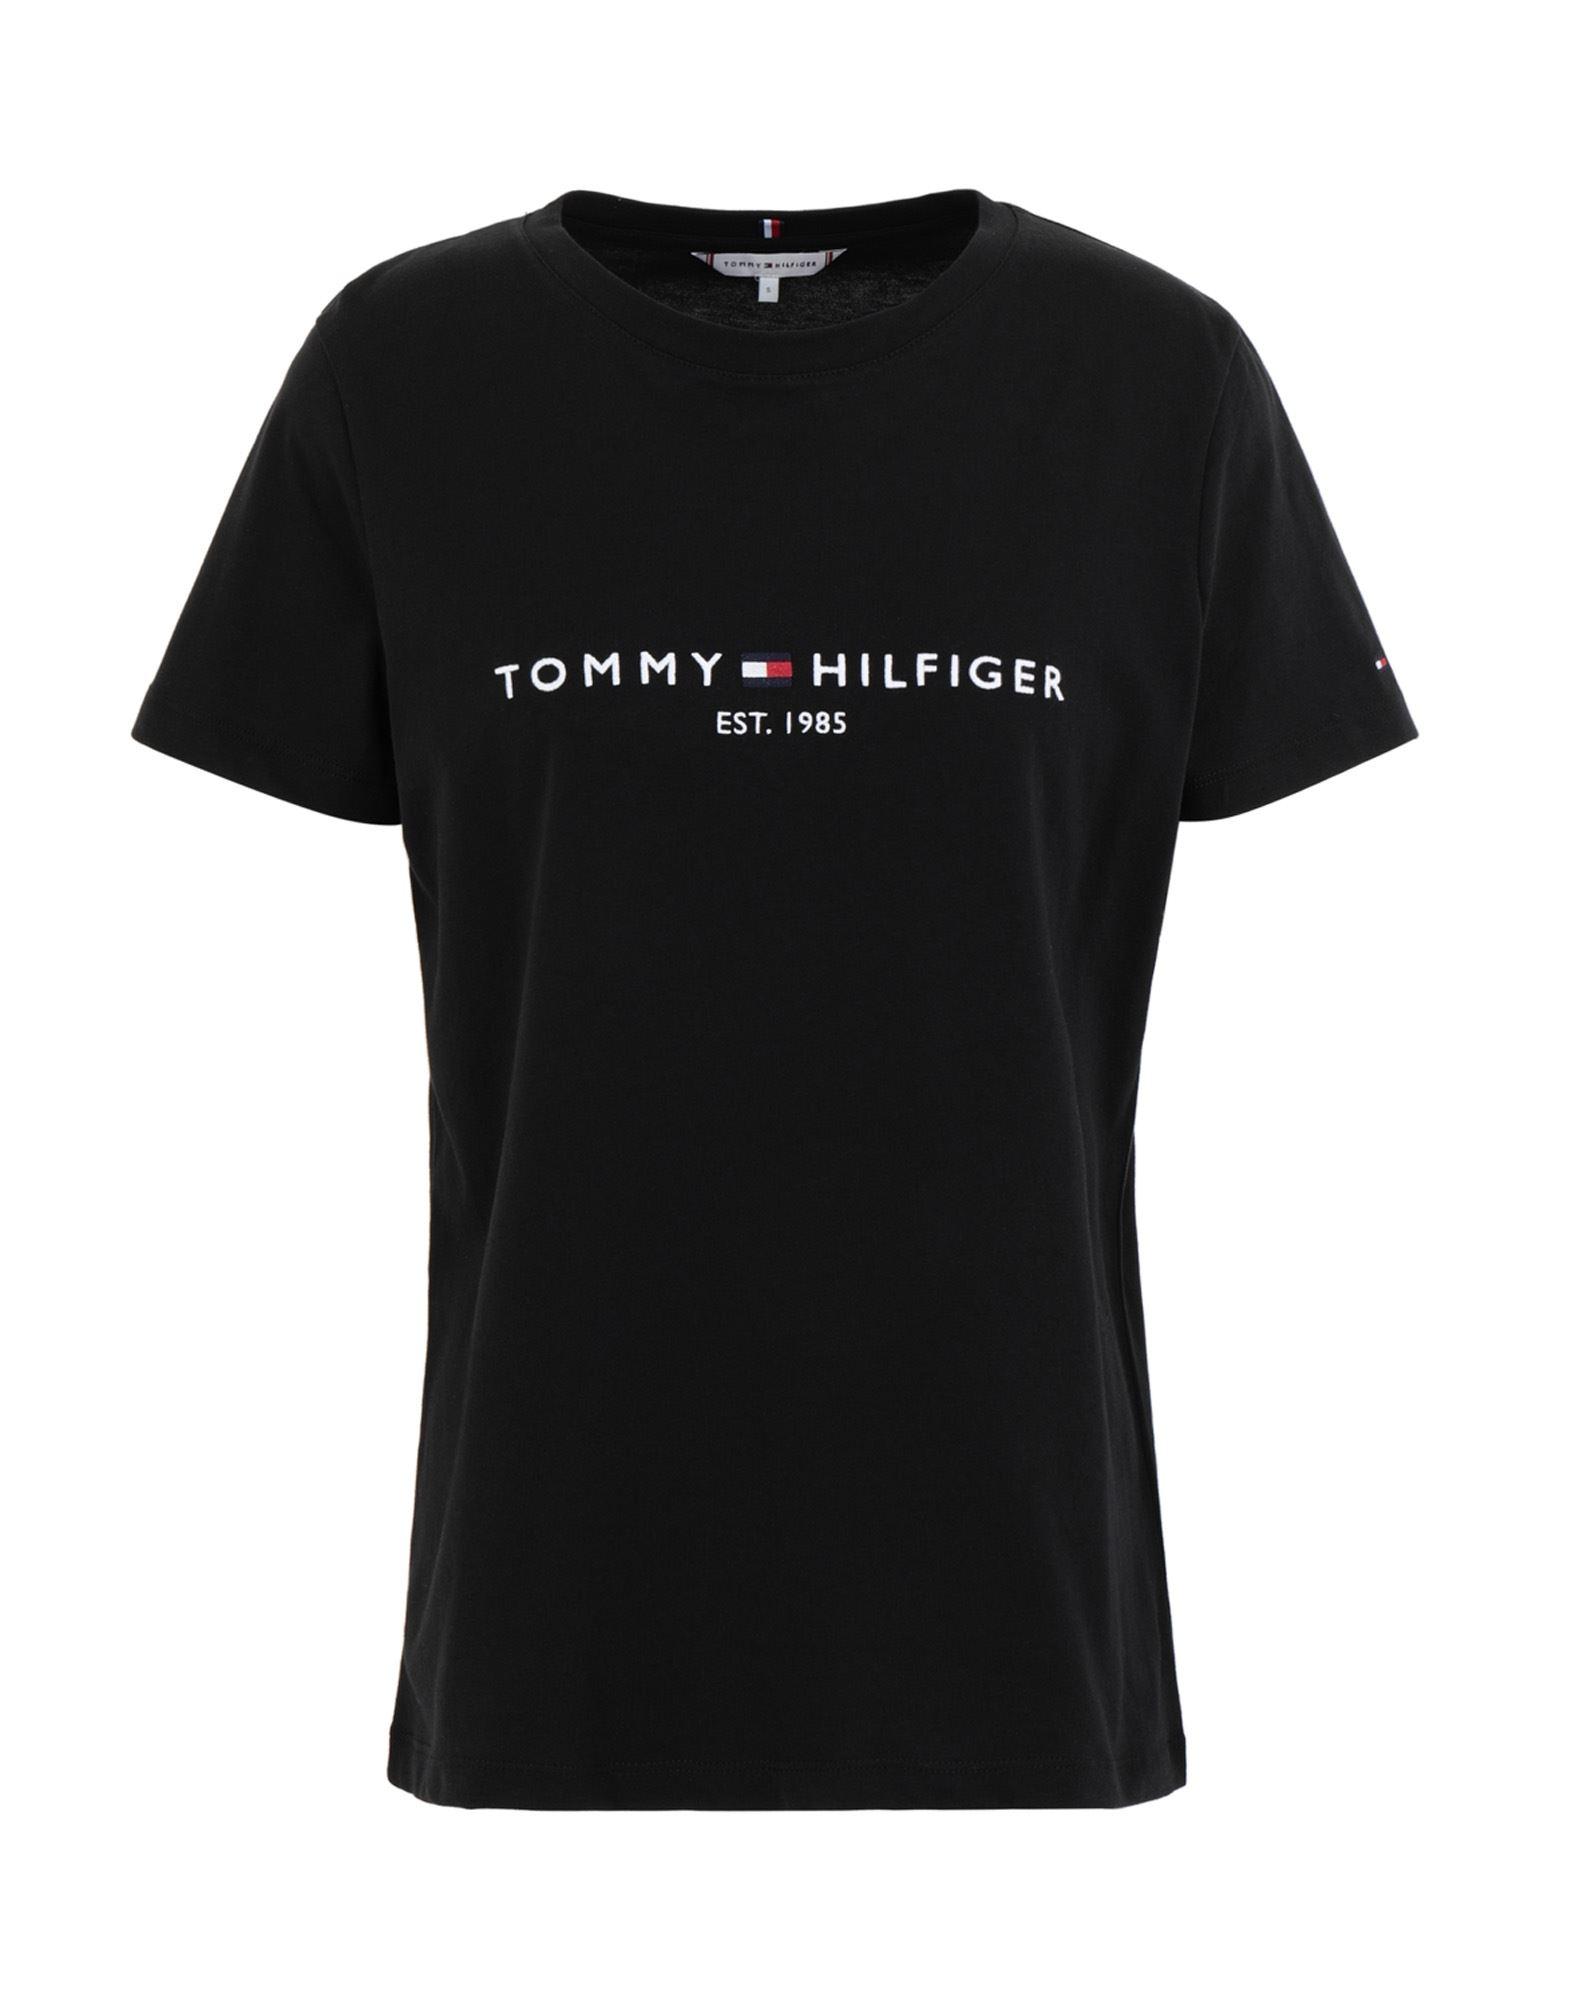 Tee Shirt Tommy Hilfiger Noir Dubai, SAVE 45% - www.fourwoodcapital.com